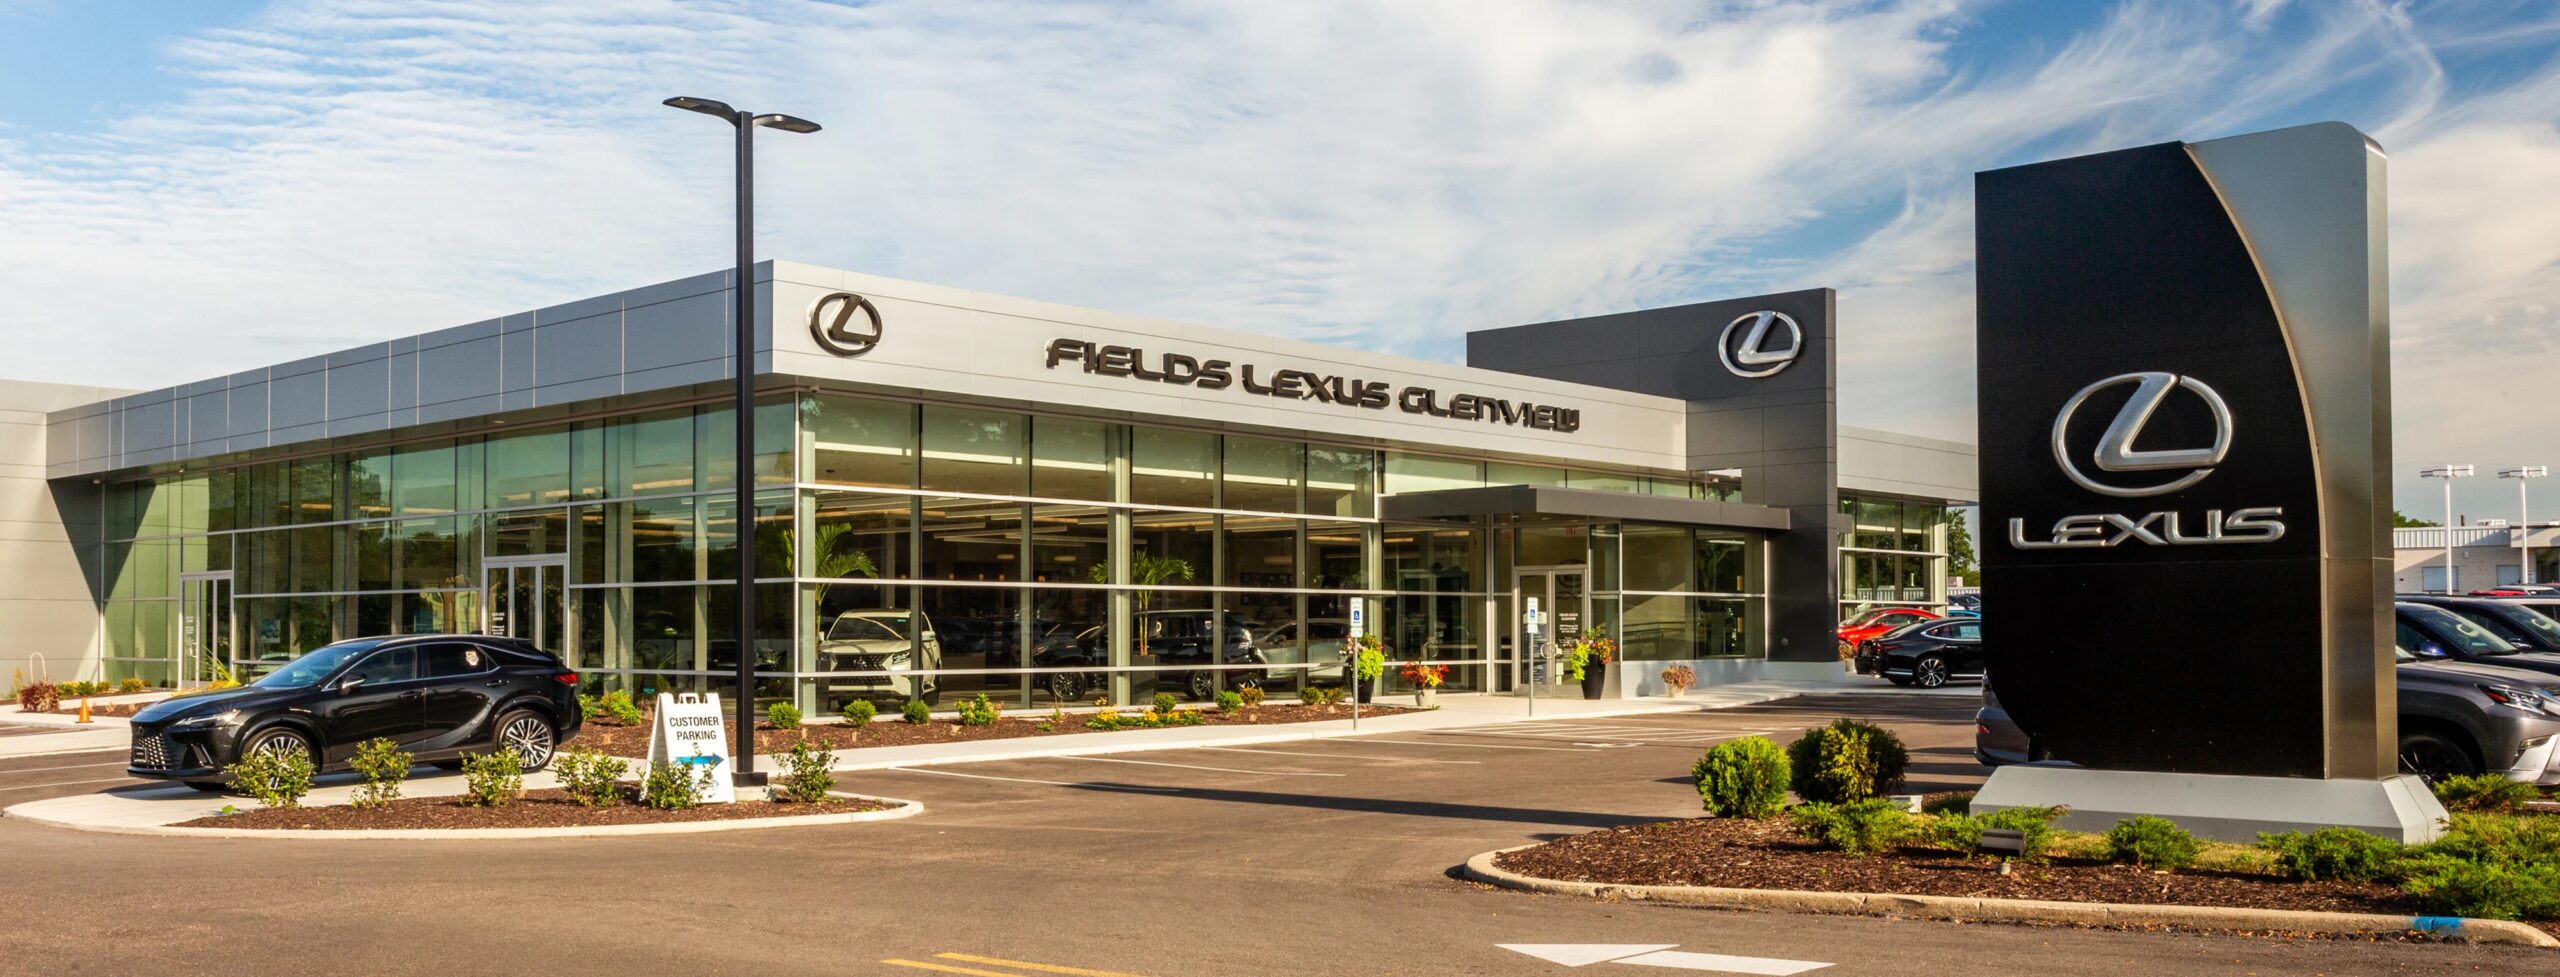 Fields Lexus showroom on a beautiful sunny day